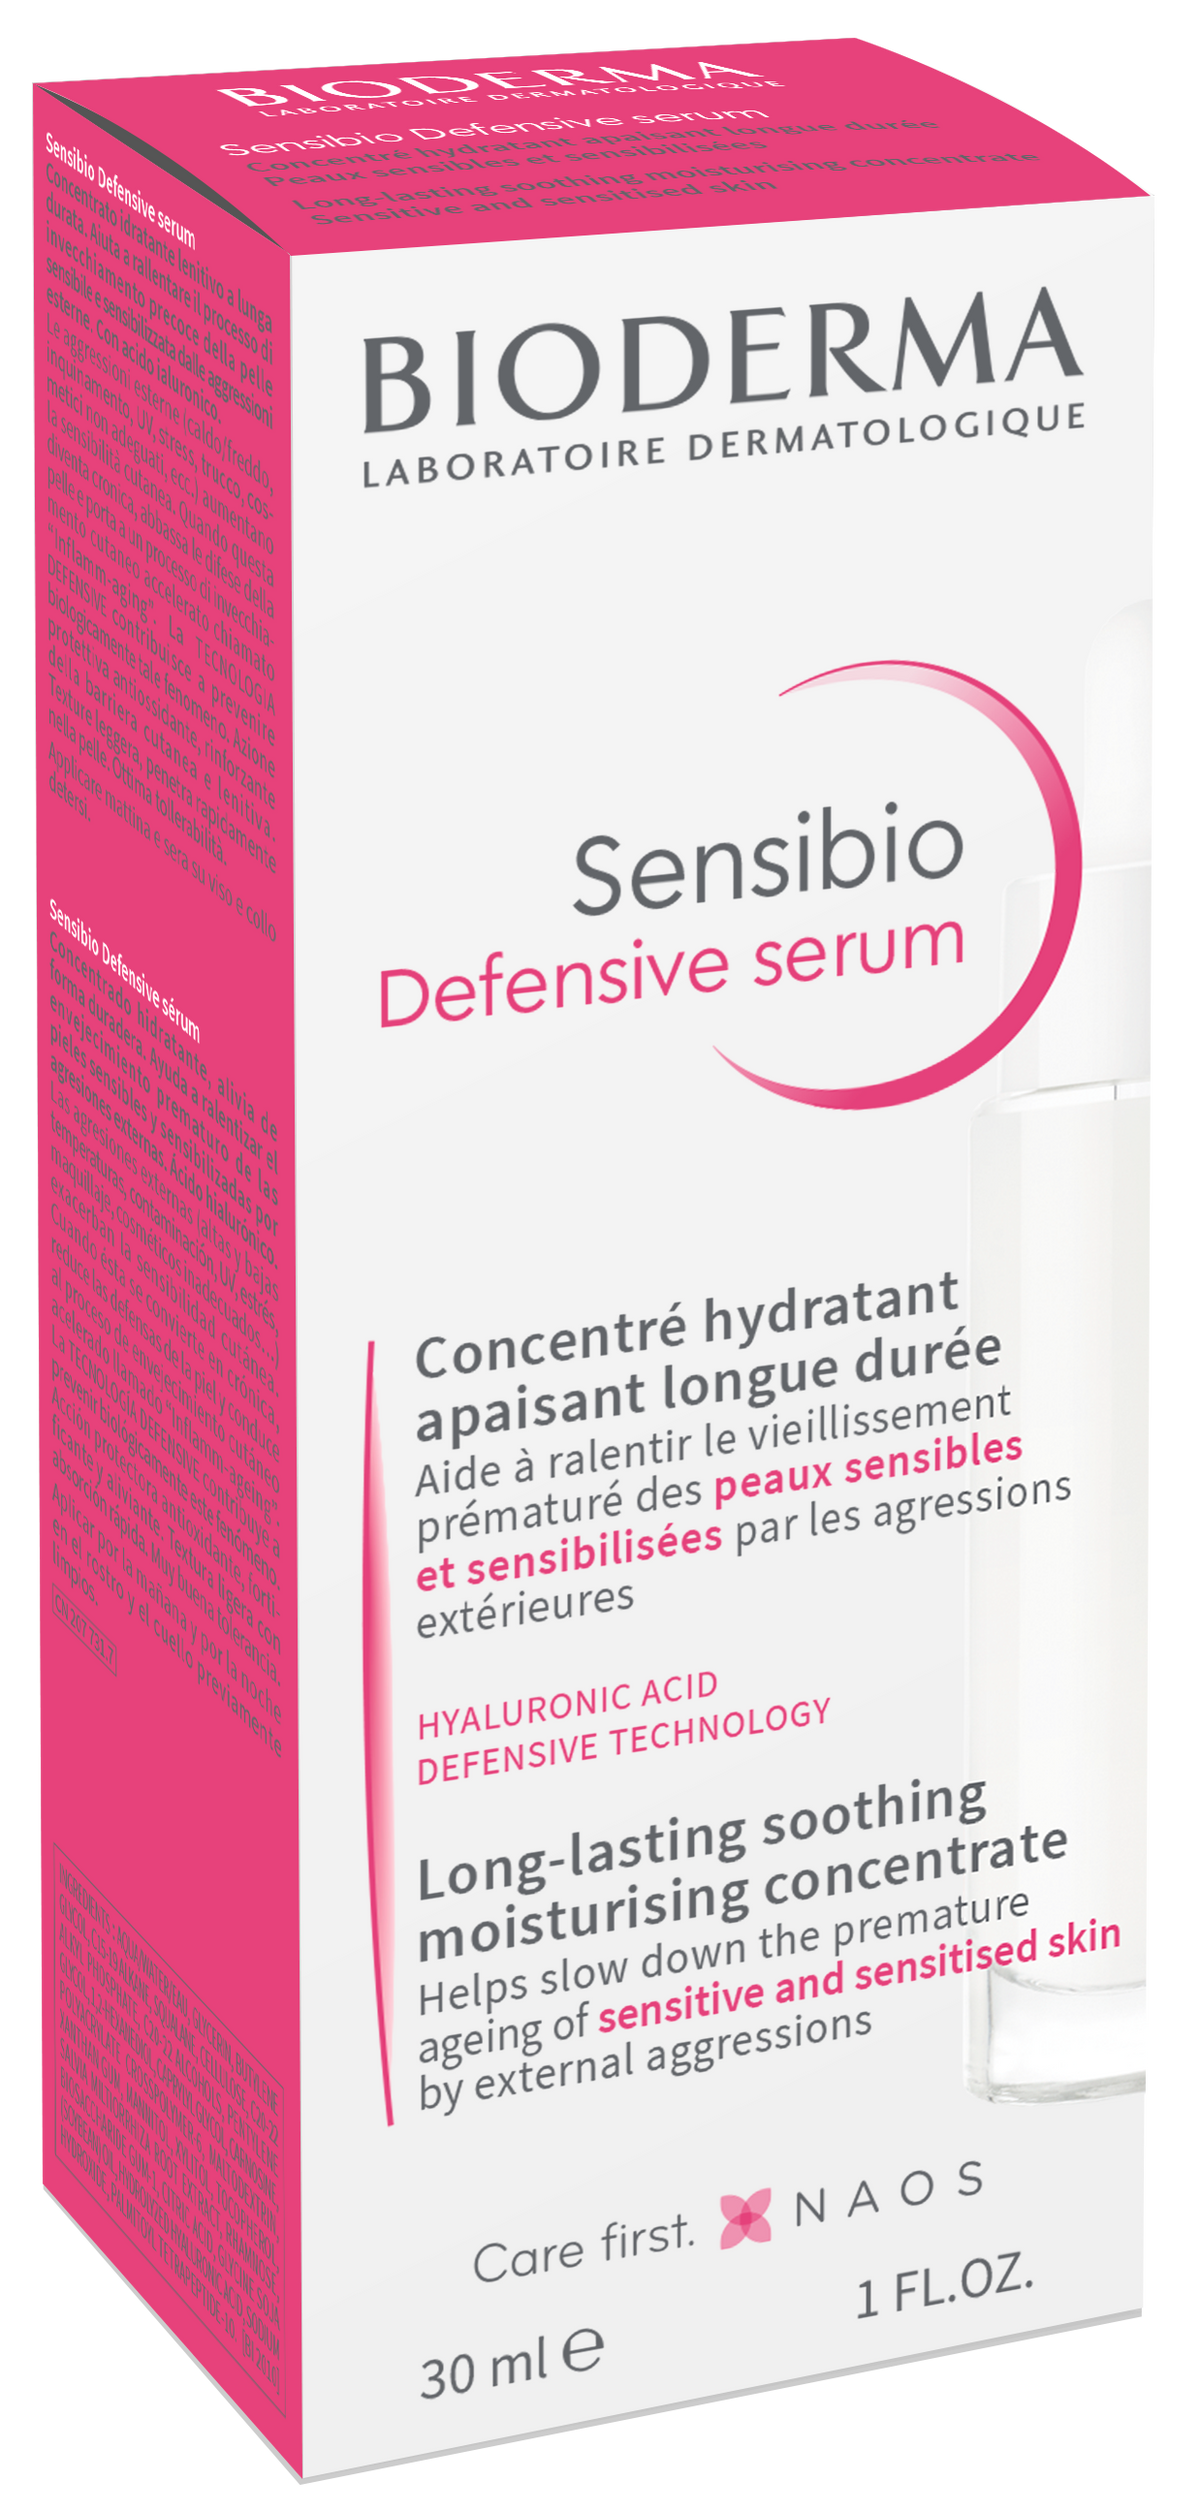 Bioderma Sensibio Defensive Serum 30ml | Your Partner for Glowing Glass Skin